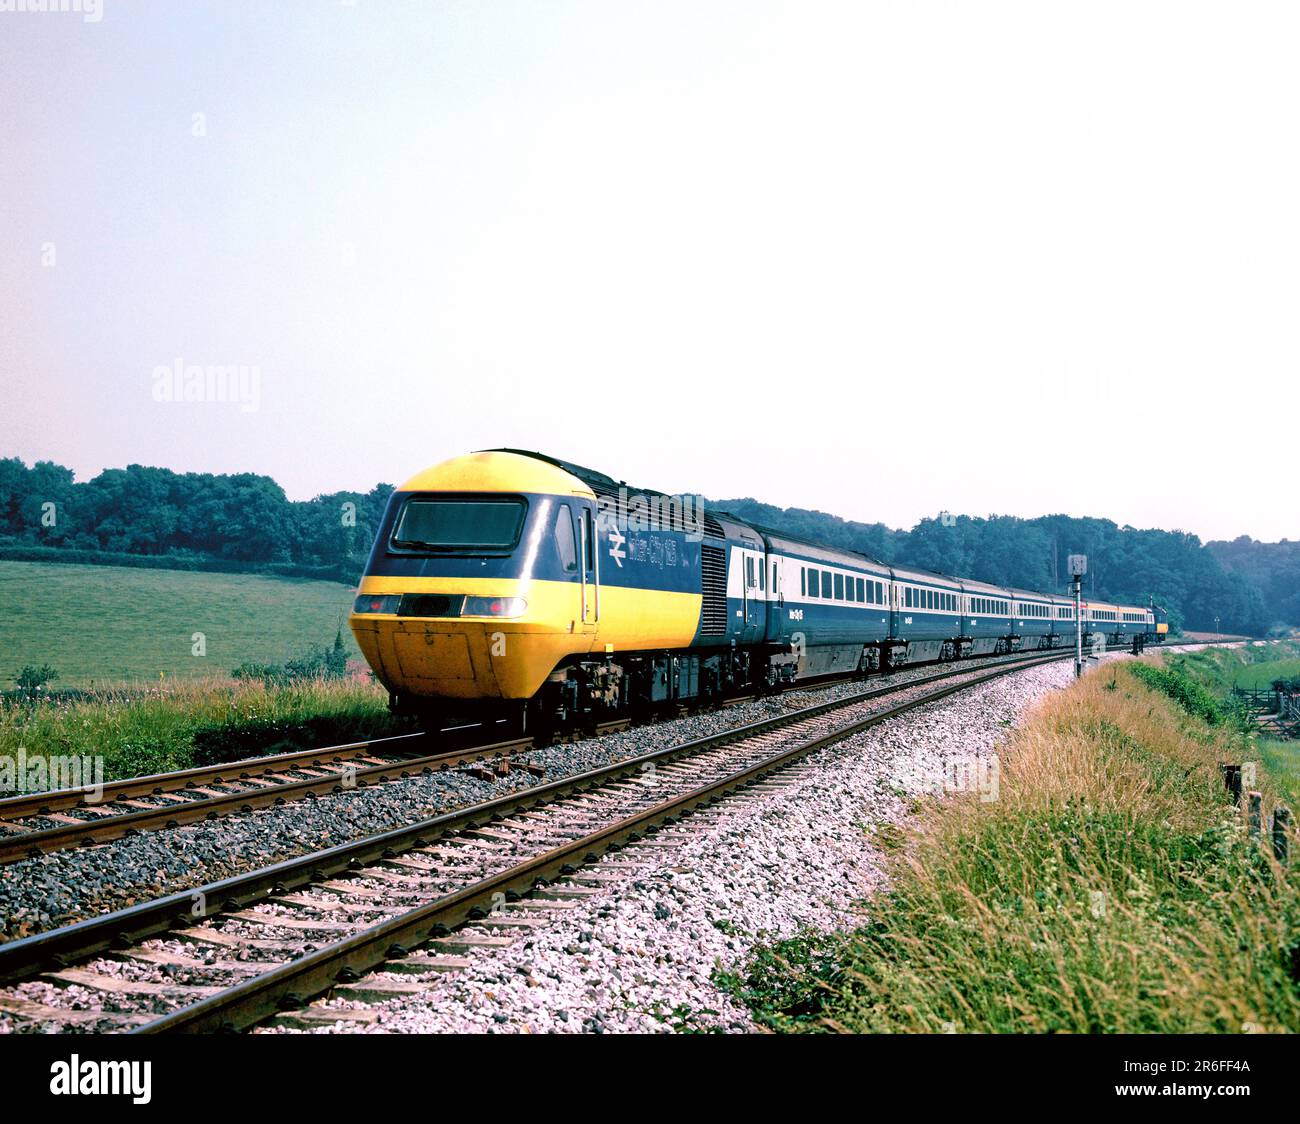 United Kingdom. England. Railways. Inter-city passenger high-speed diesel train. Stock Photo